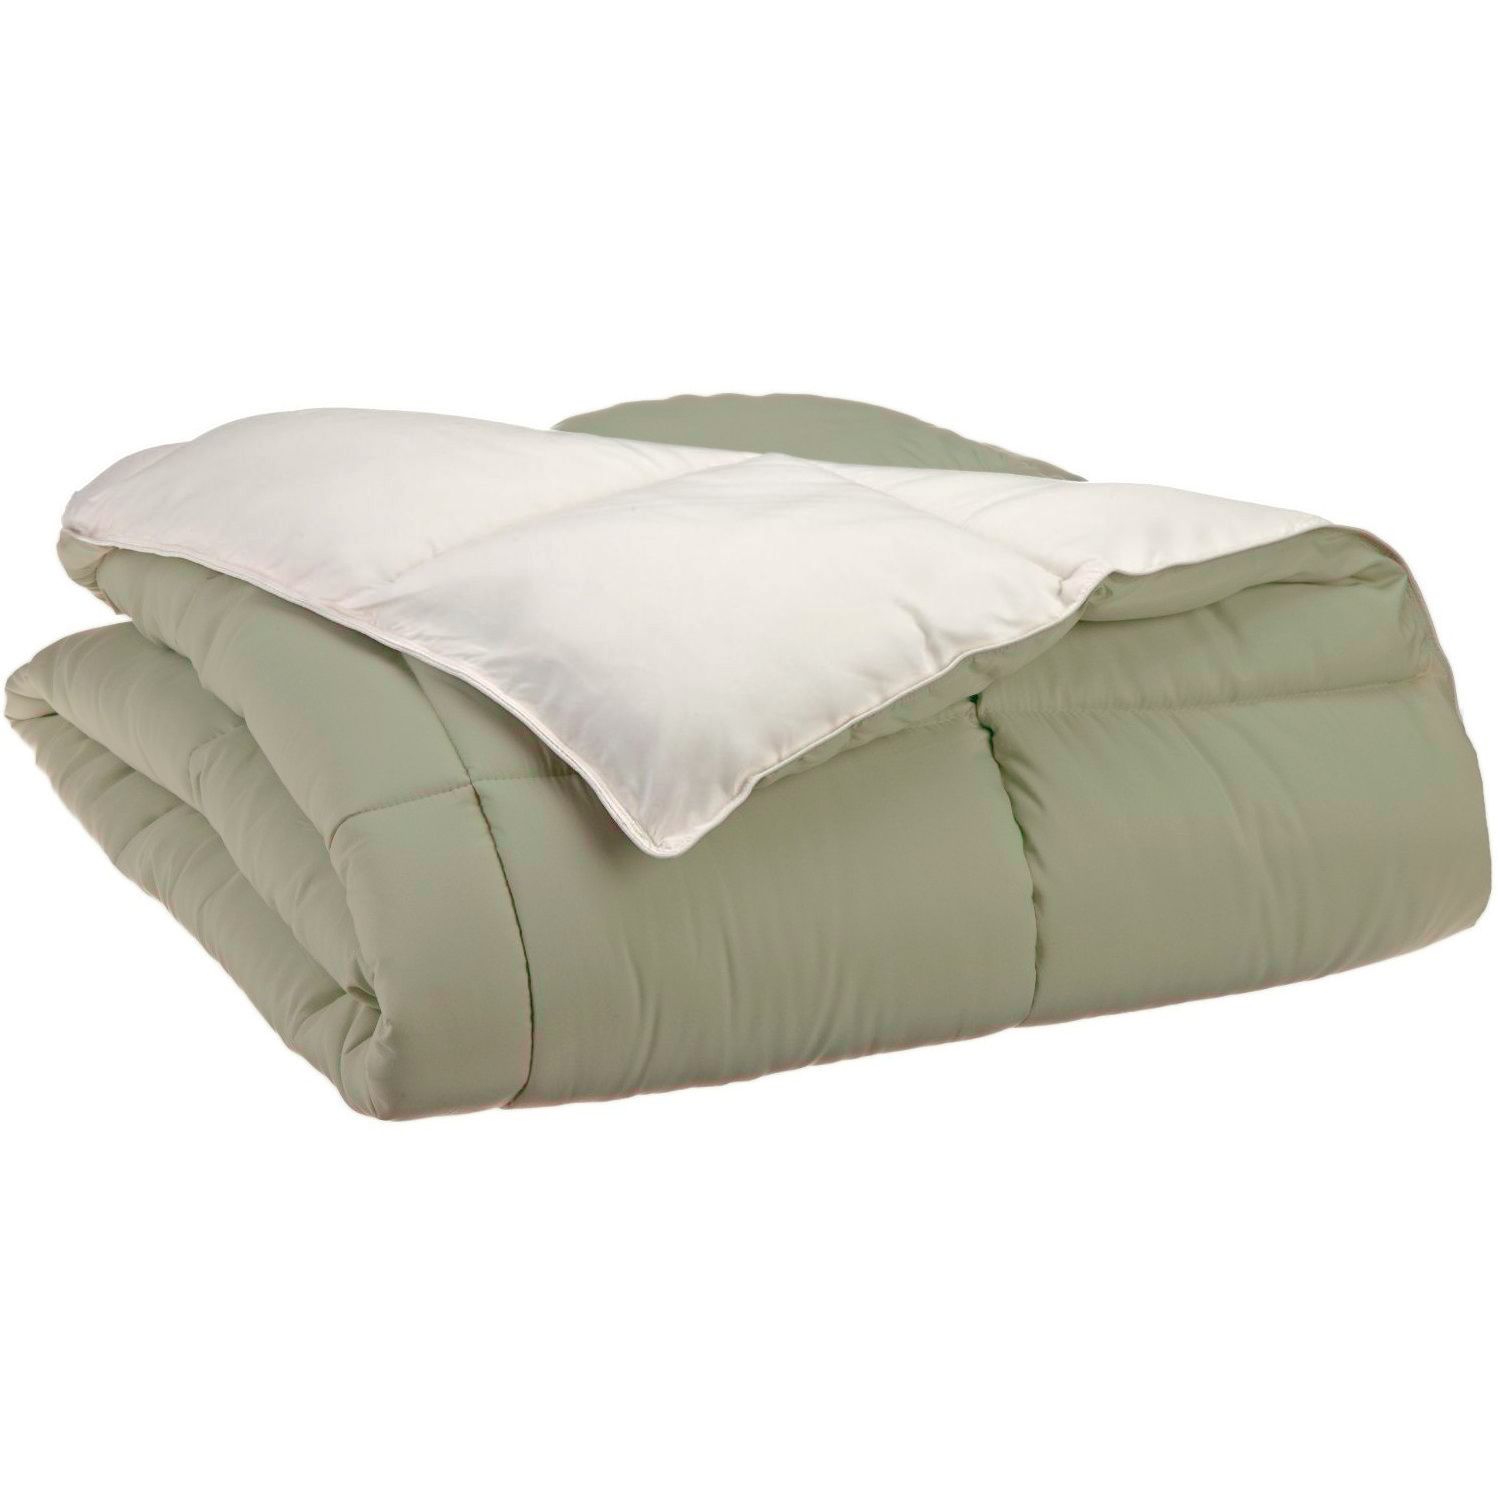 Superior Down Alternative Reversible Comforter, King, Ivory/ Sage - image 1 of 4